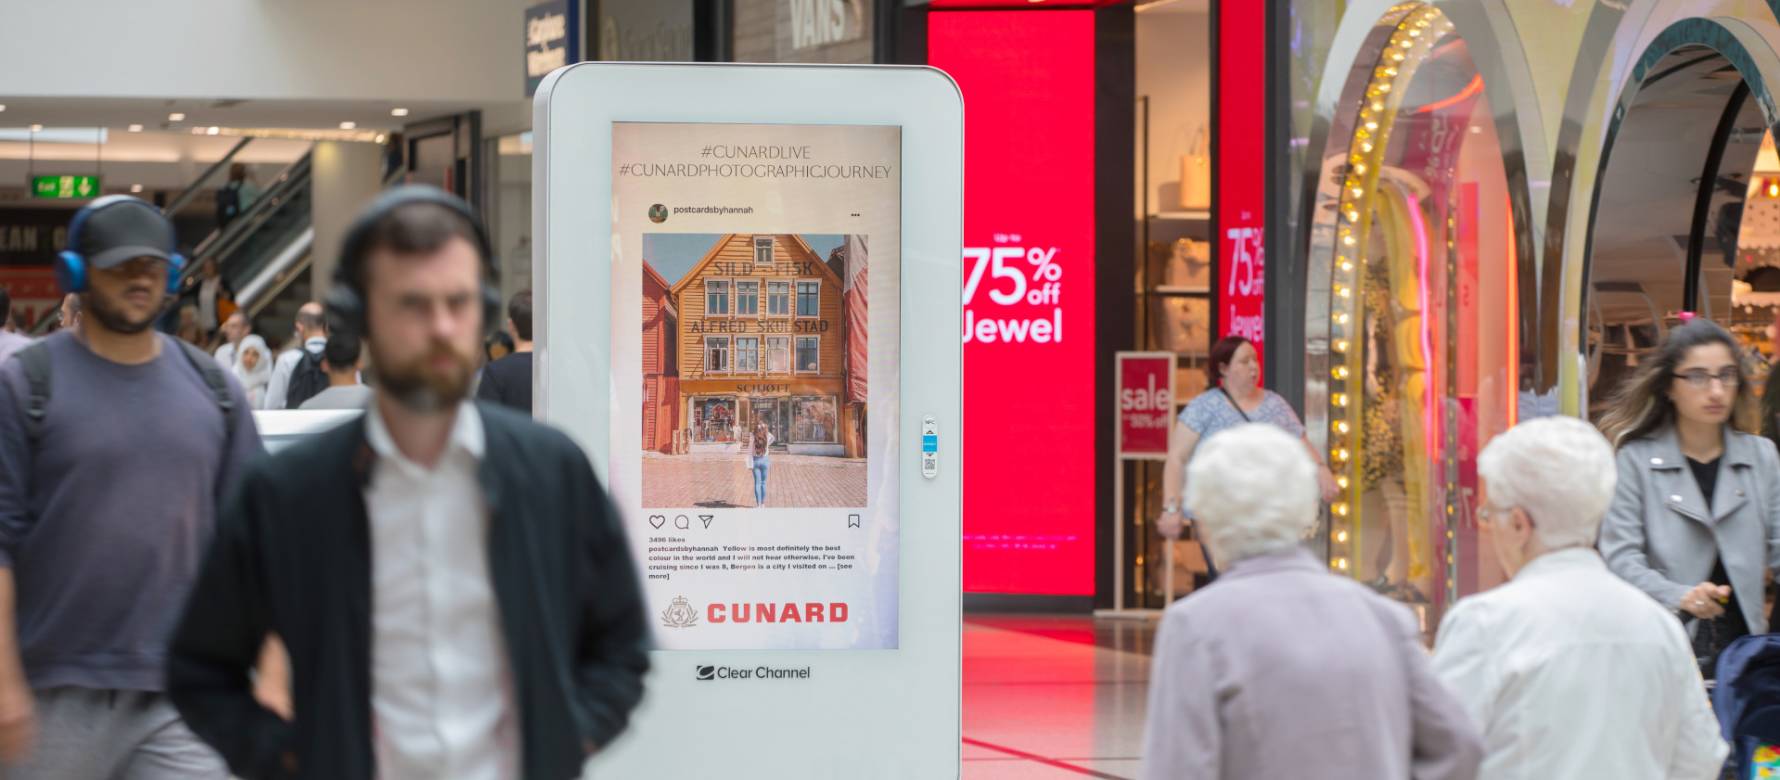 Digital screen in a busy shopping mall showing Cunard advert